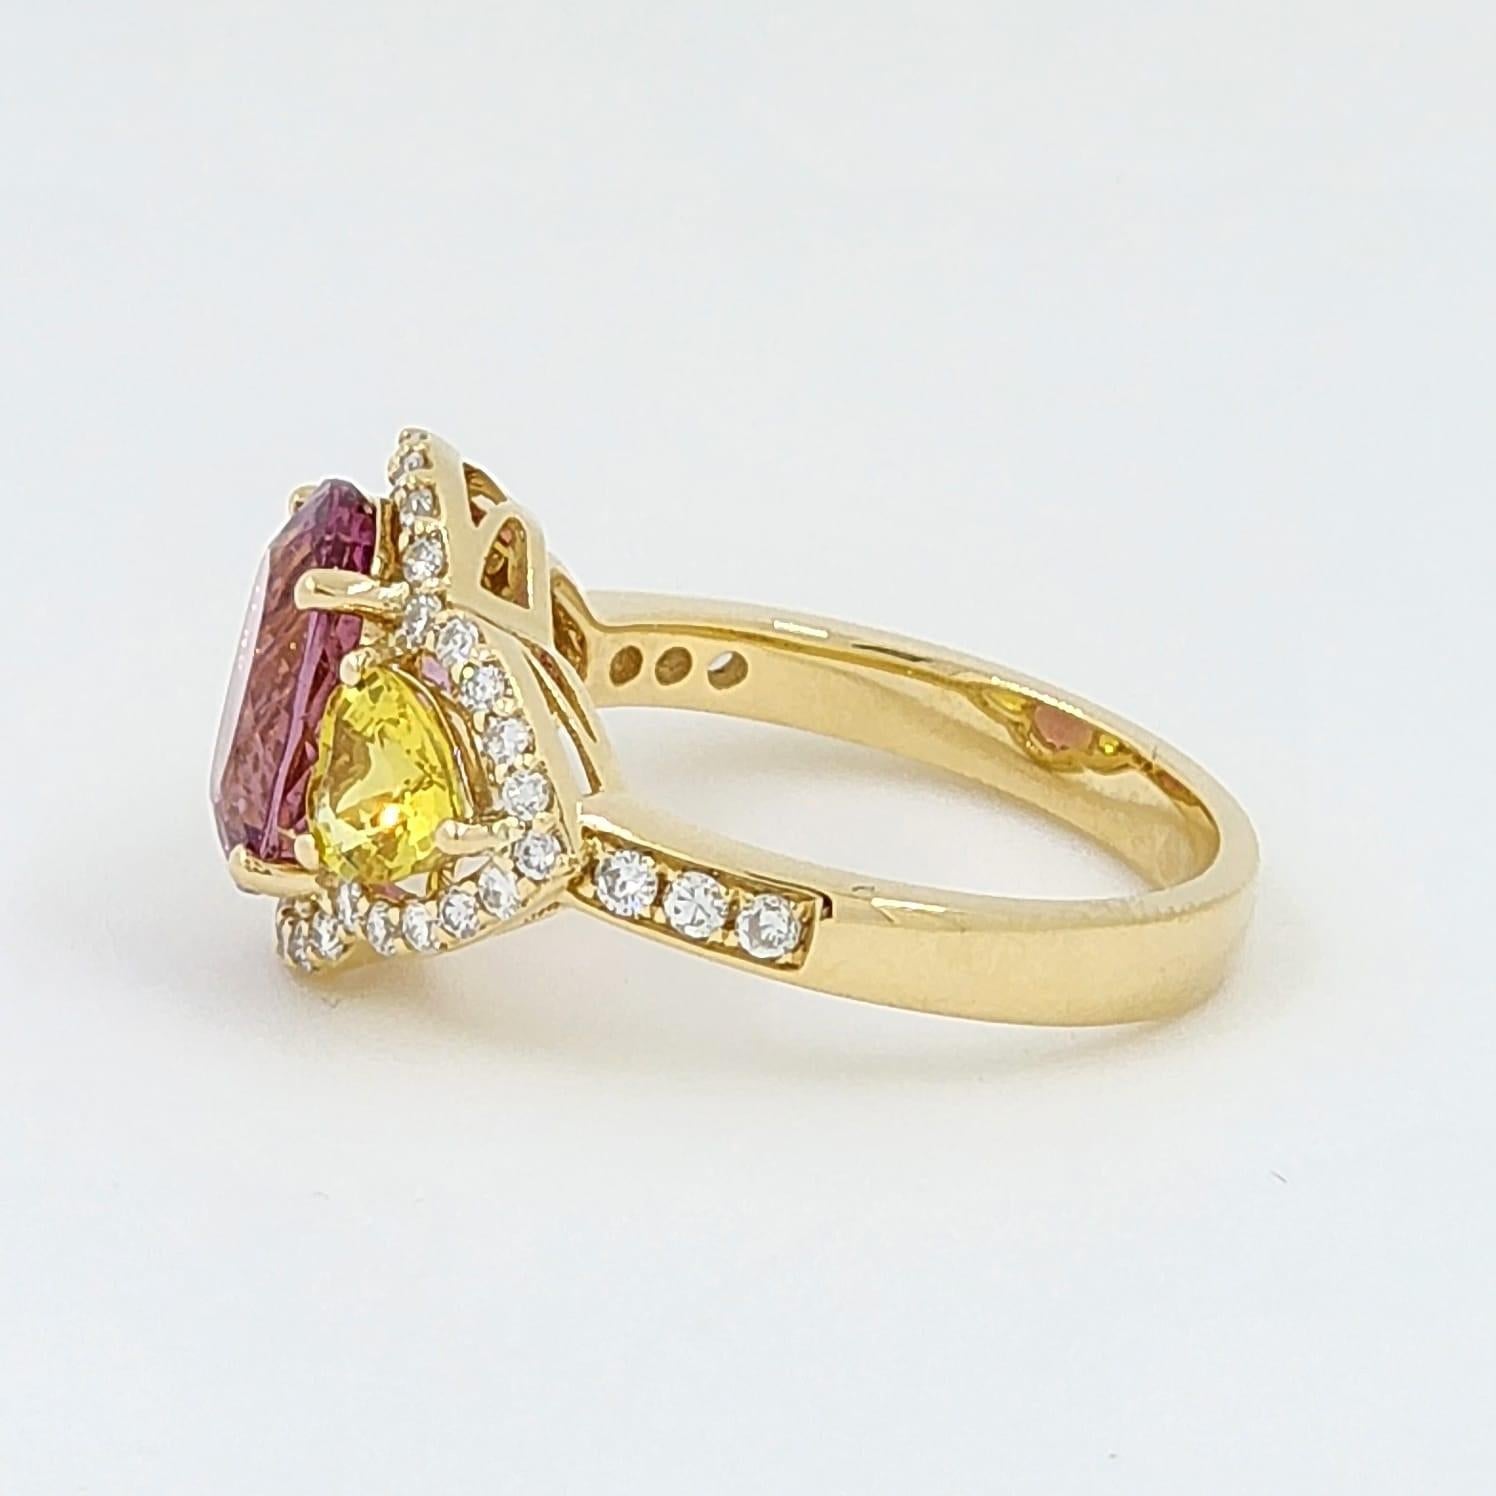 Oval Cut 2.56 Carats Tourmaline Yellow Sapphire and Diamond Ring in 18 Karat Yellow Gold